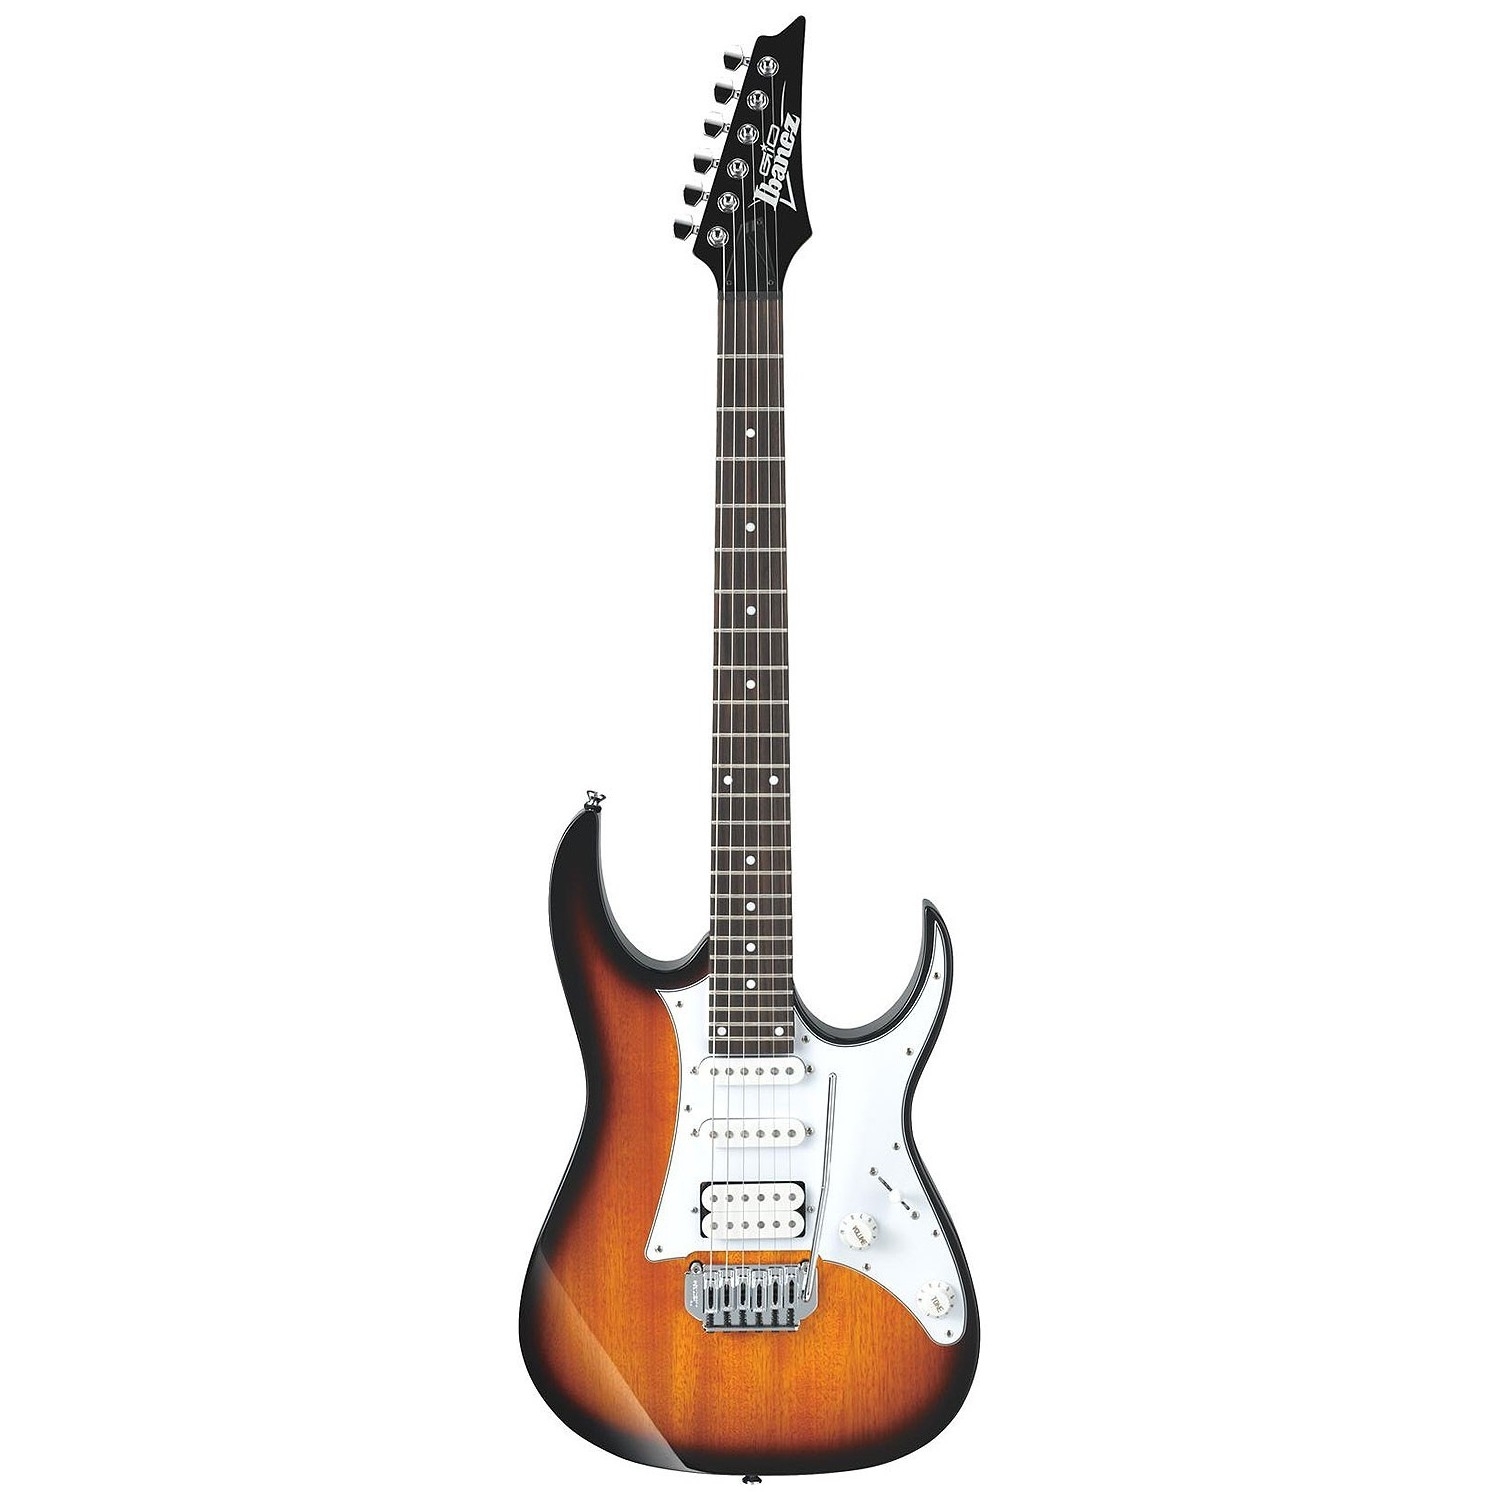 Ibanez GRG140SB RG Gio elektrische gitaar sunburst